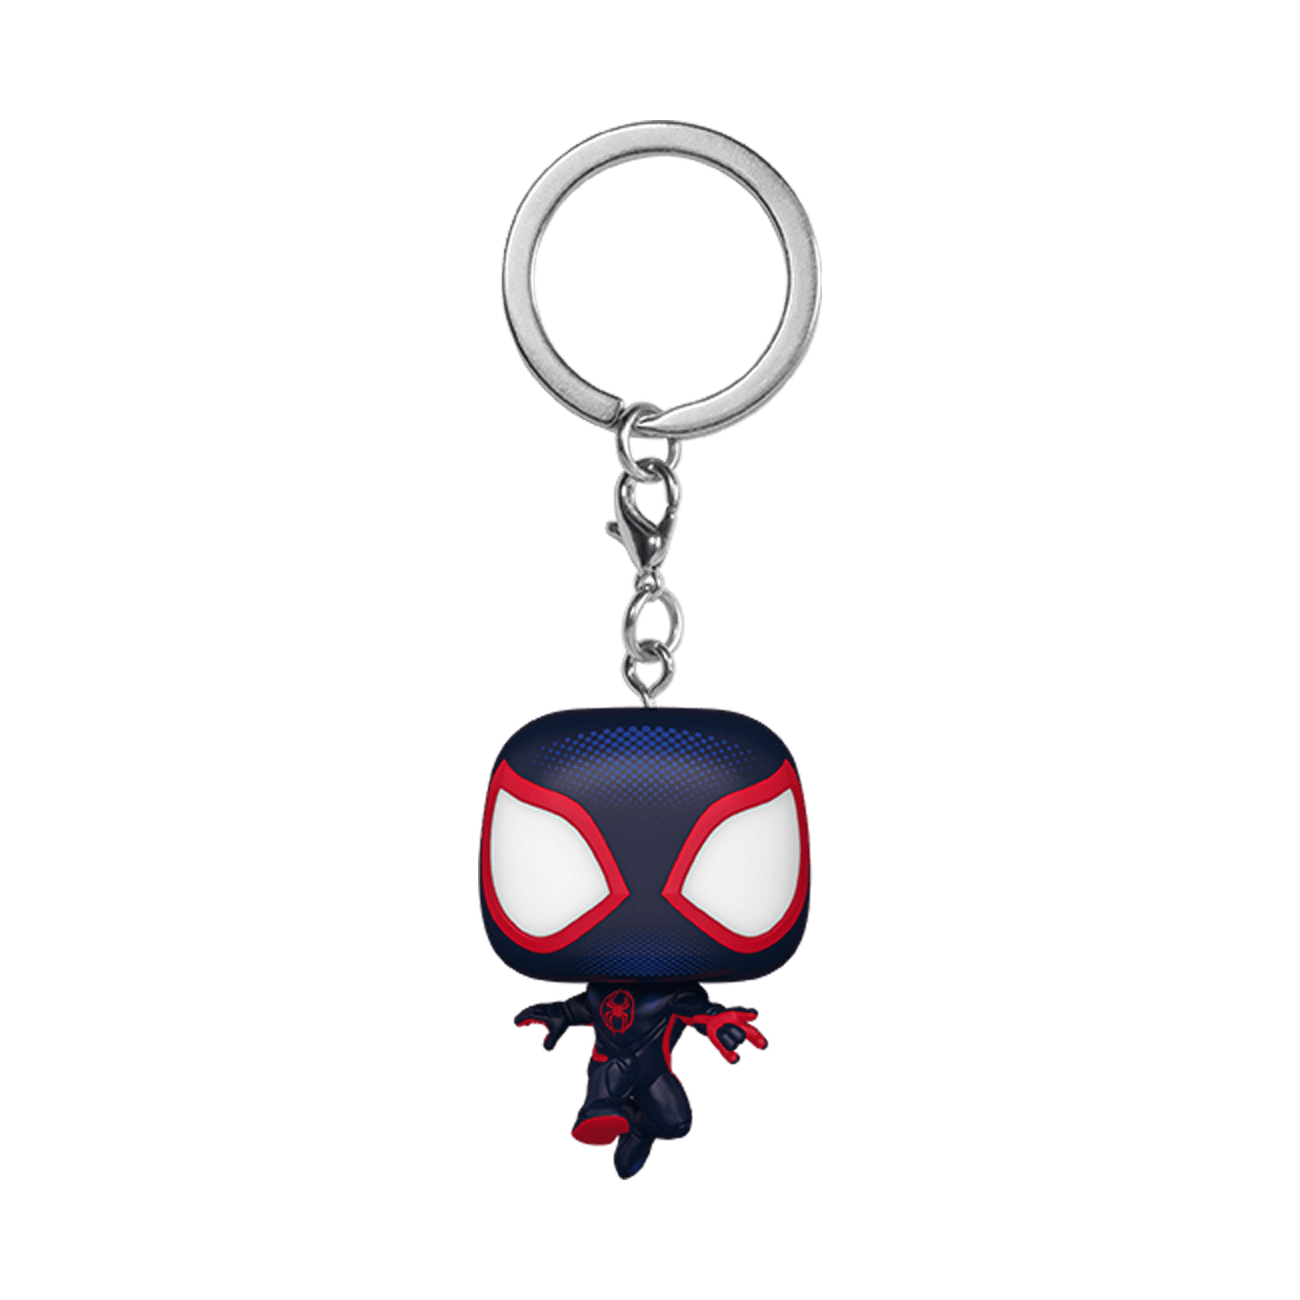 The Five Below exclusive Pop! Keychain Spider-Man from Spider-Man: Across the Spider-Verse.